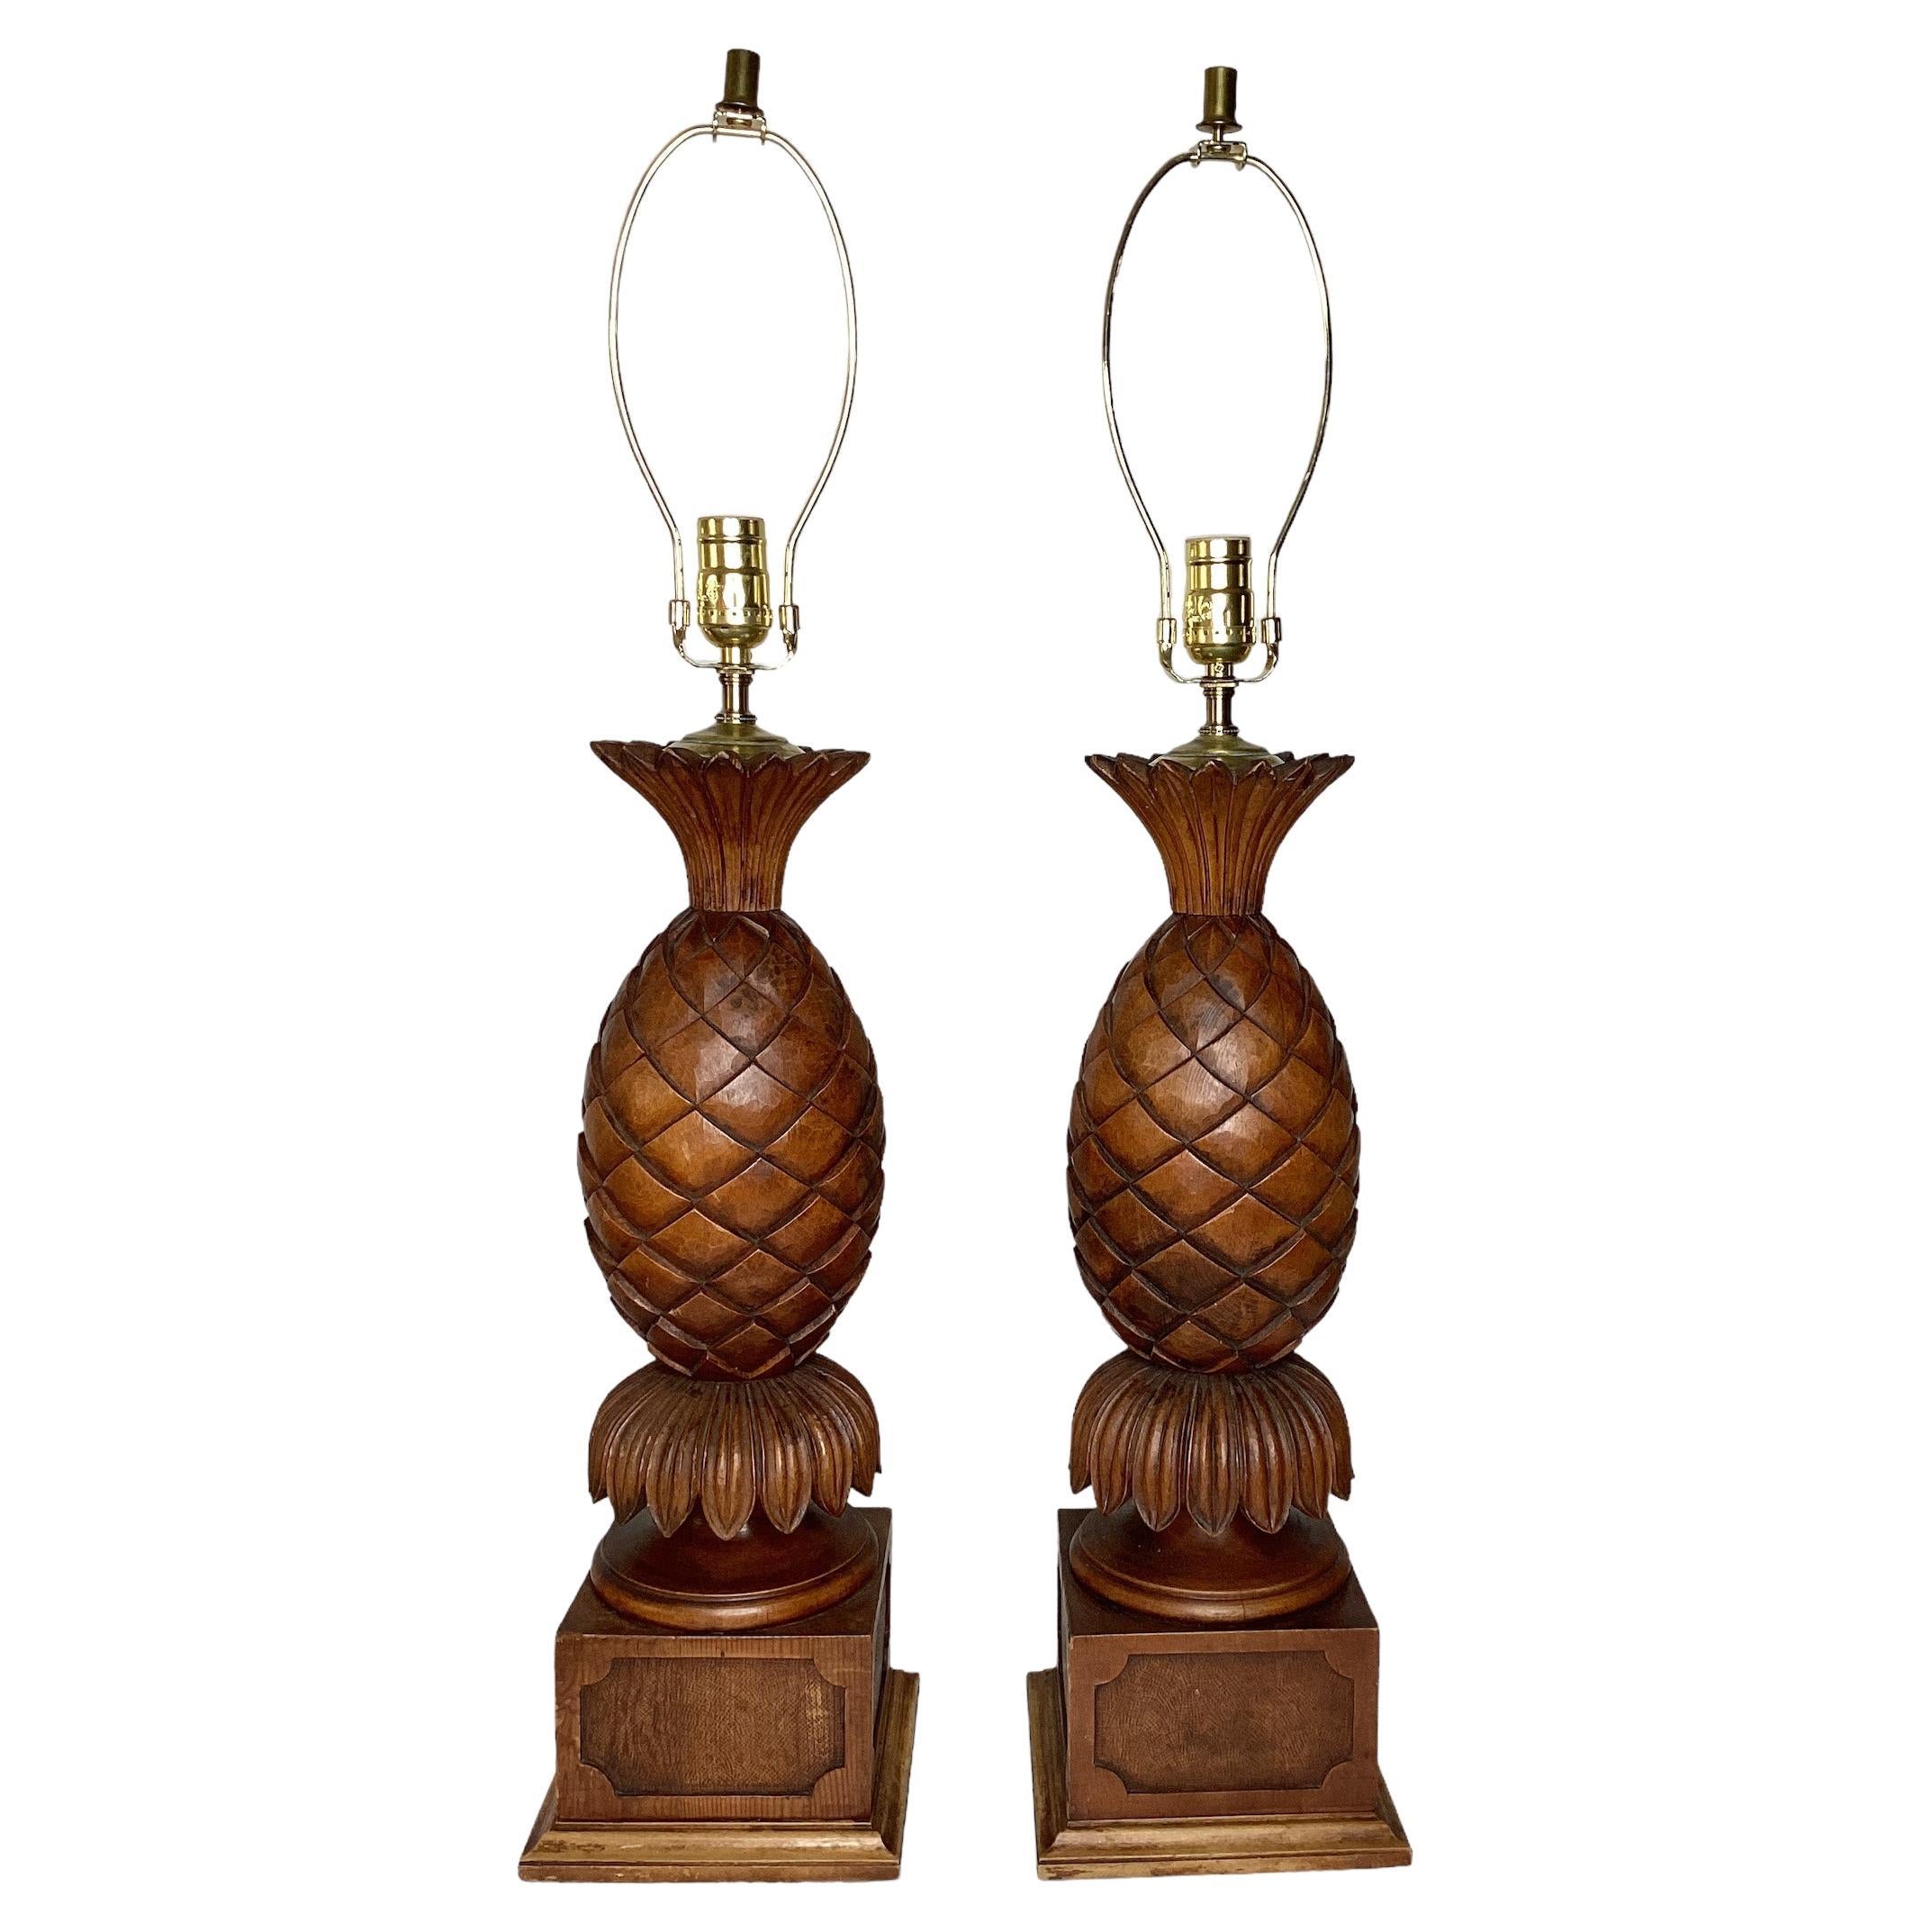 Paar geschnitzte Ananas-Lampen aus Obstholz